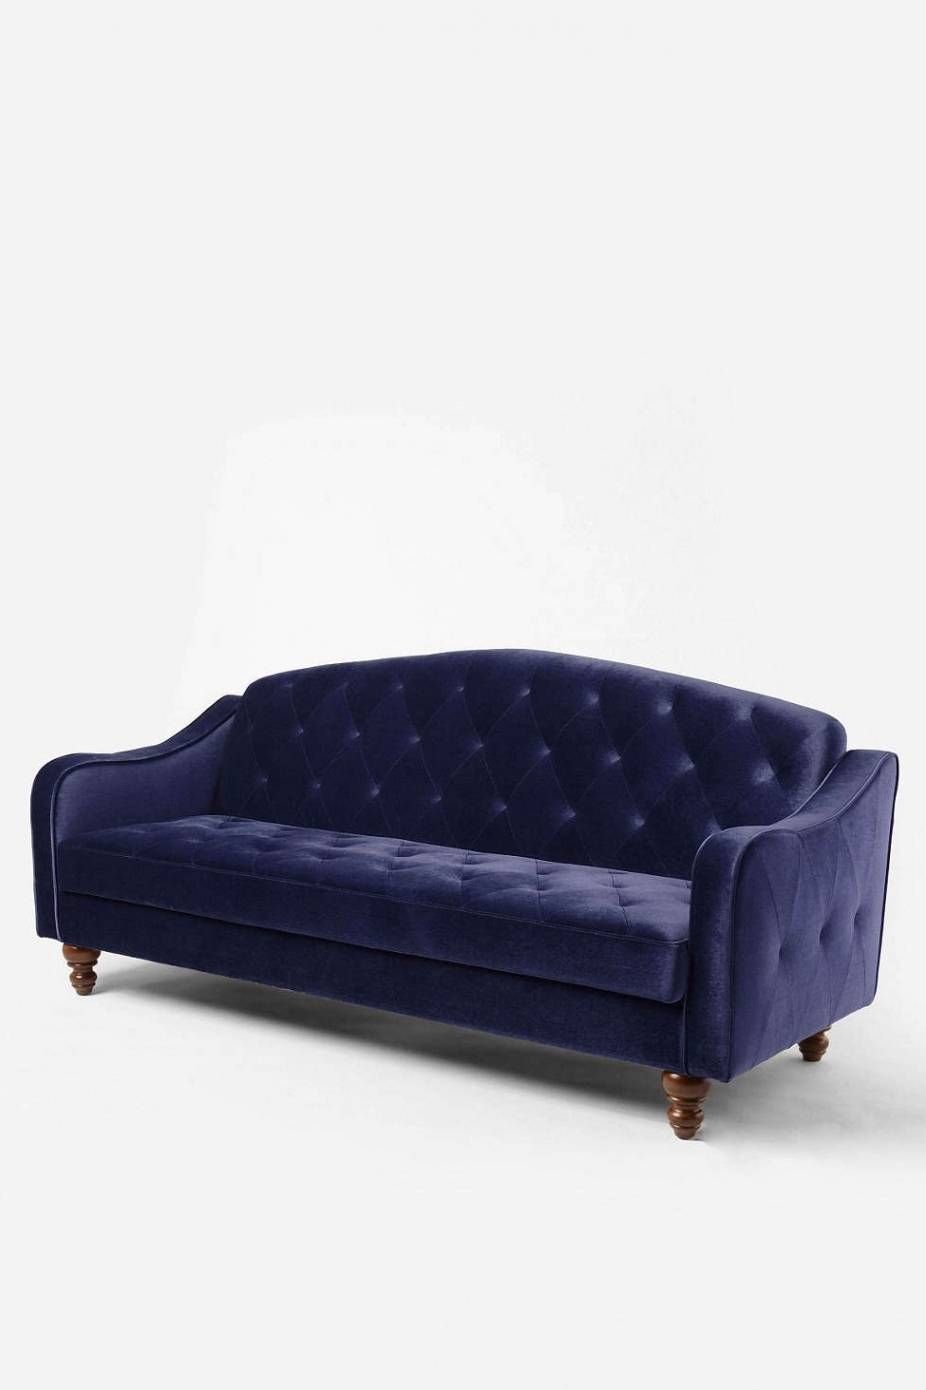 Fresh Velvet Sleeper Sofa | Sofa Ideas With Ava Tufted Sleeper Sofas (View 11 of 15)